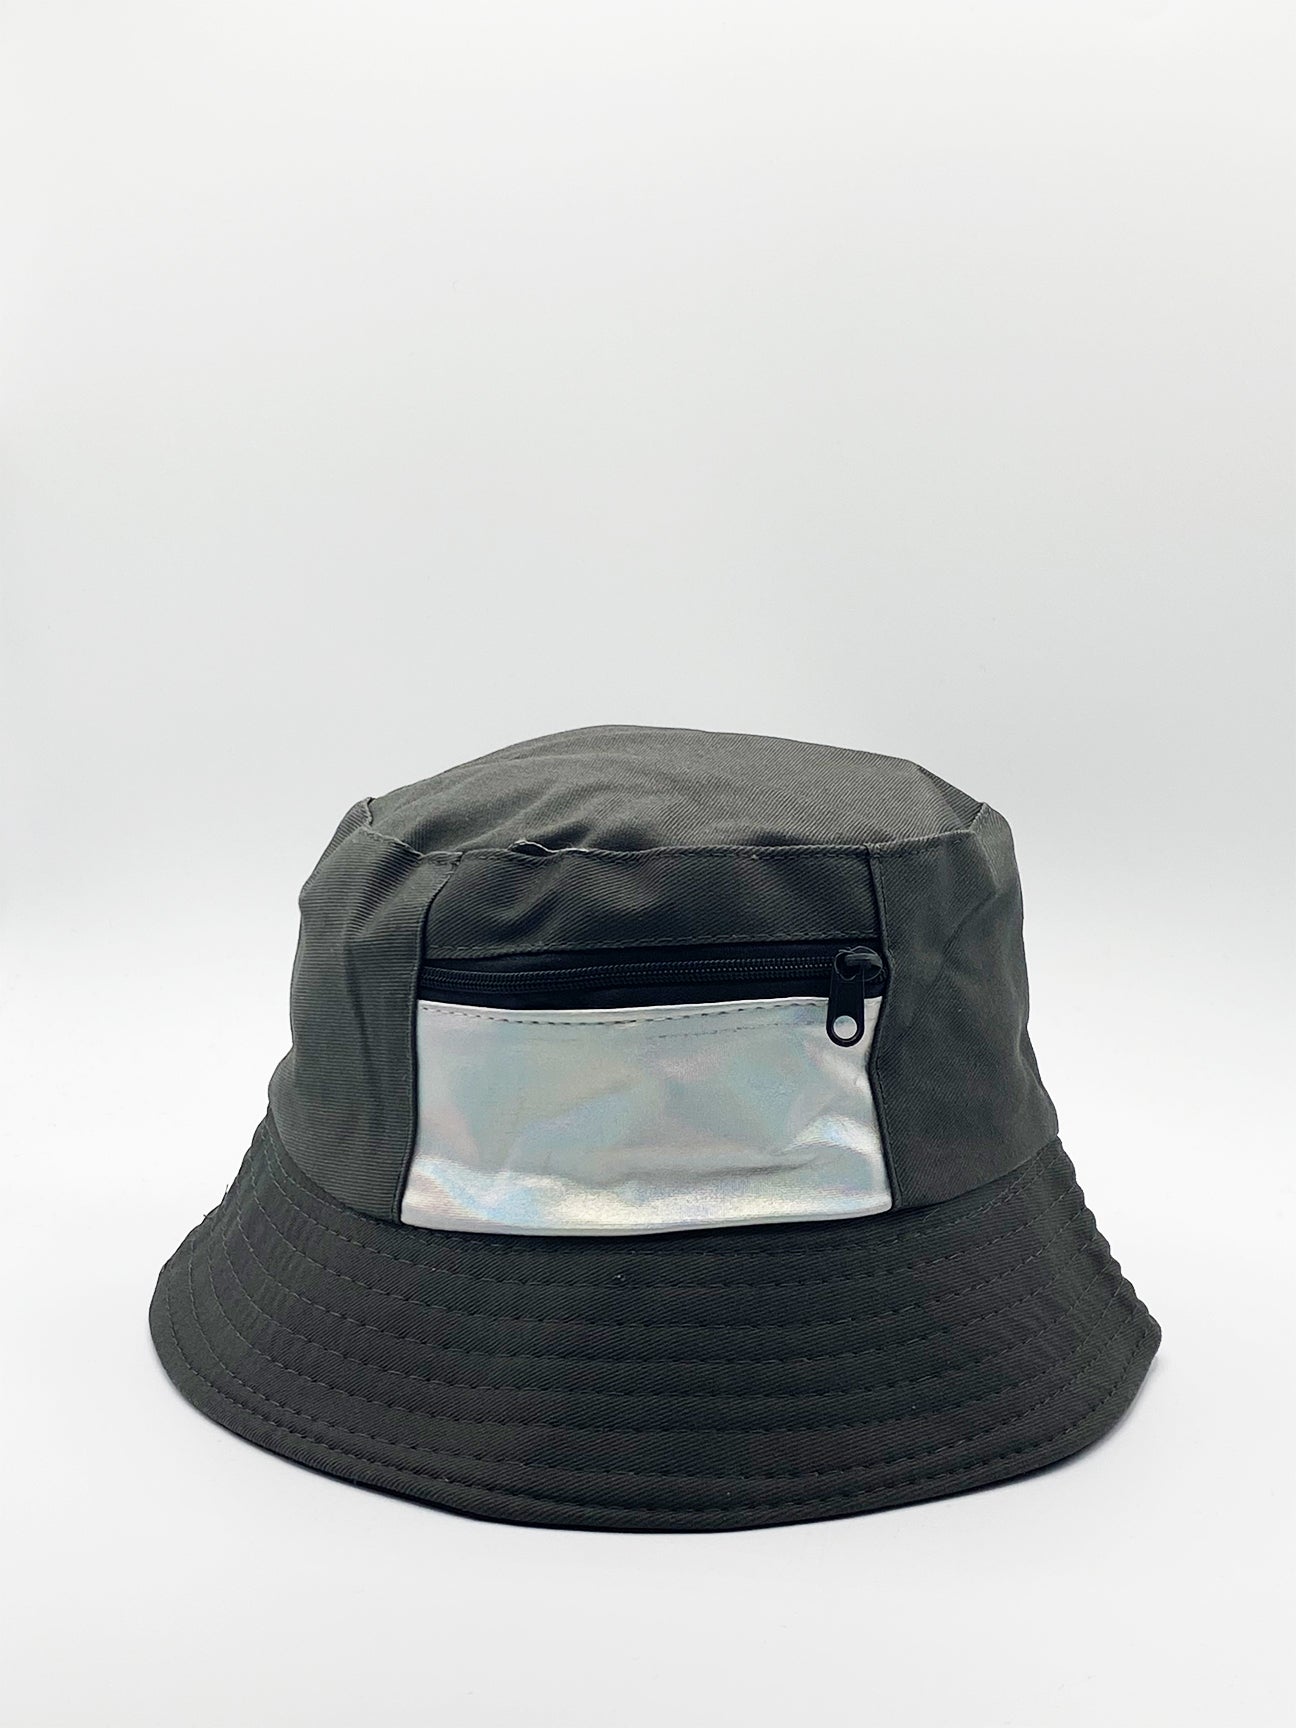 Khaki Tonal Colored Bucket Hat With Iridescent Pocket Detail - svnx